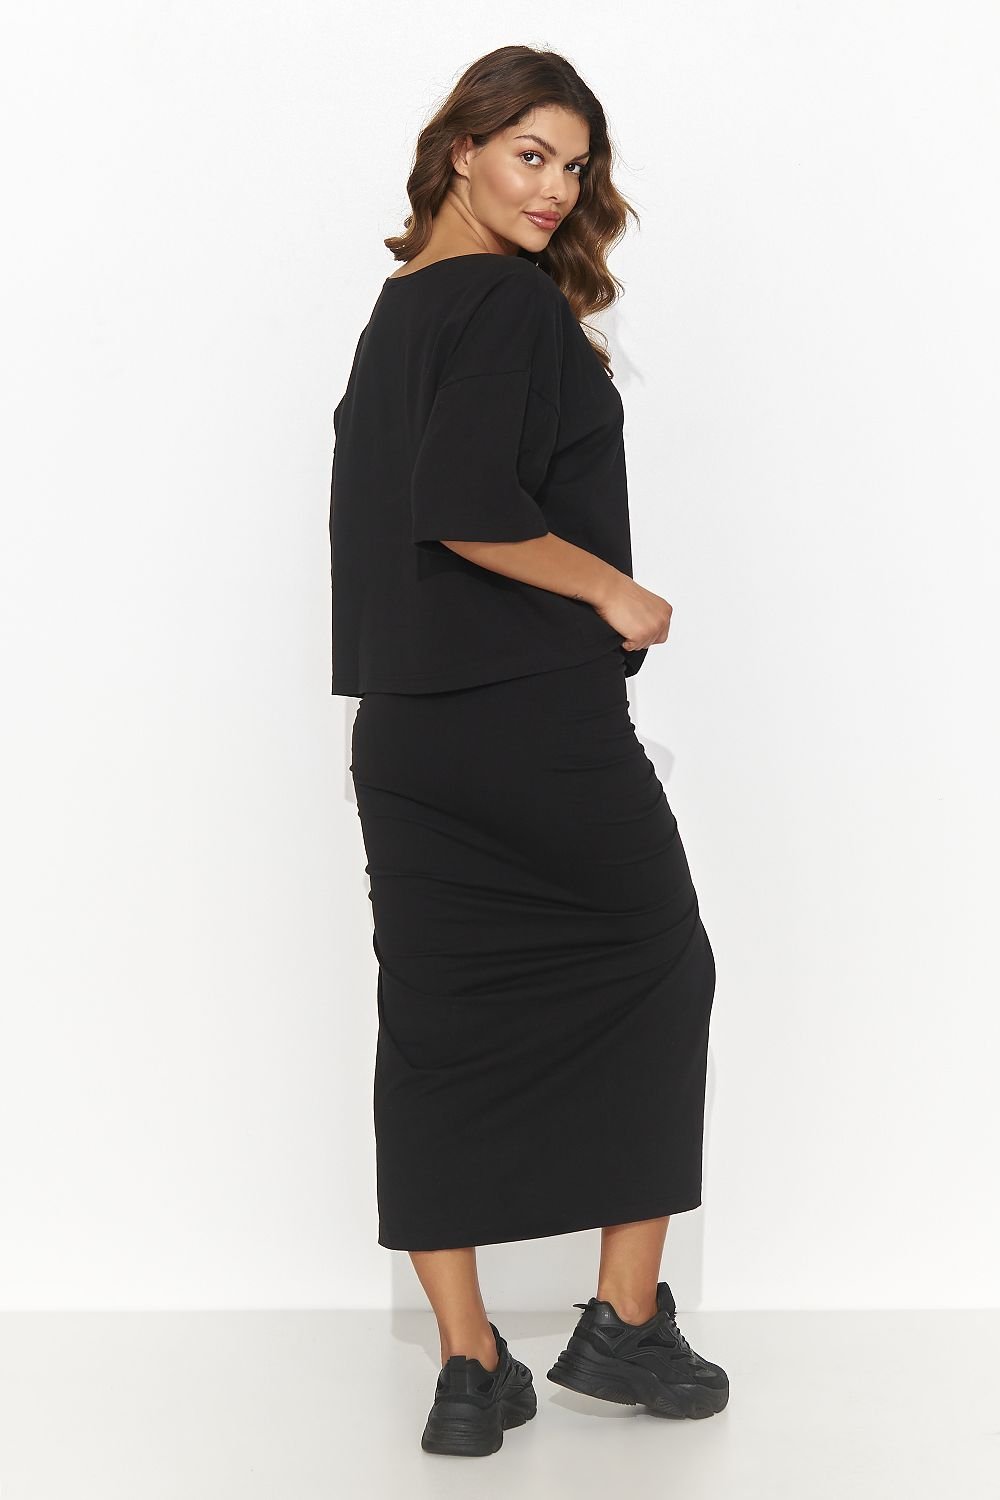 TEEK - Black Top Ruched Slits Skirt Set SET TEEK MH   